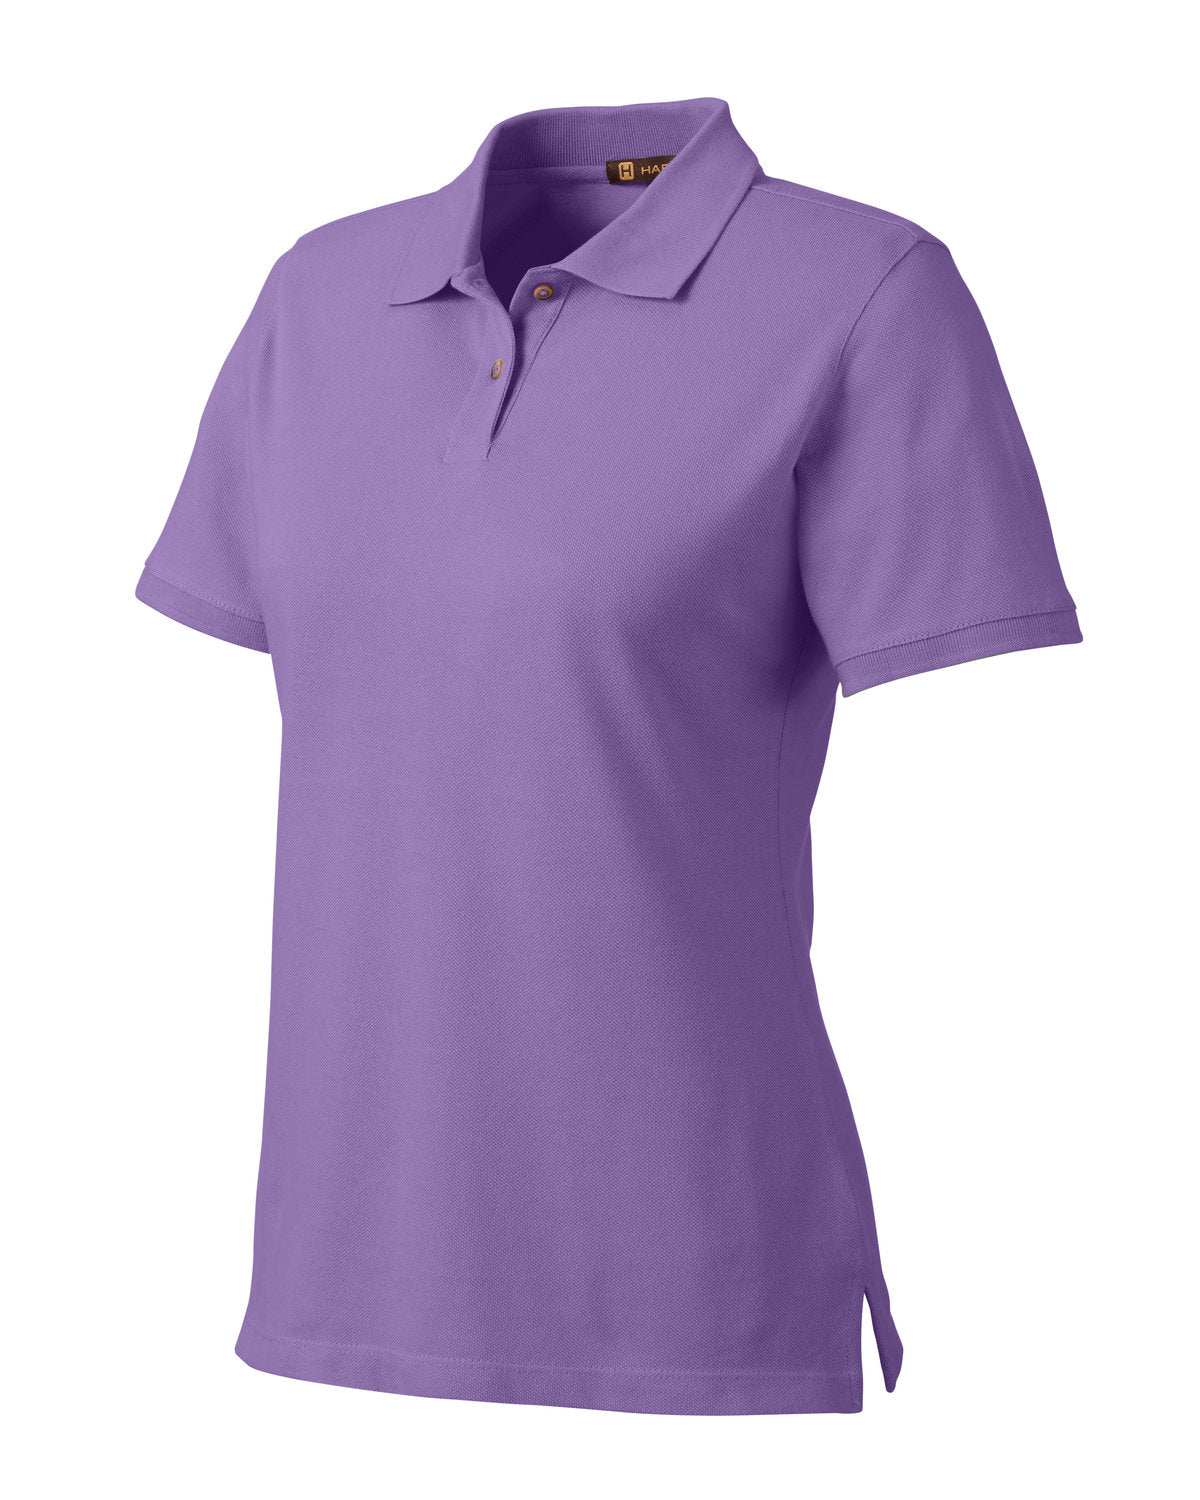 Harriton - Women's Ringspun Cotton Piqué Short-Sleeve Polo - M200W